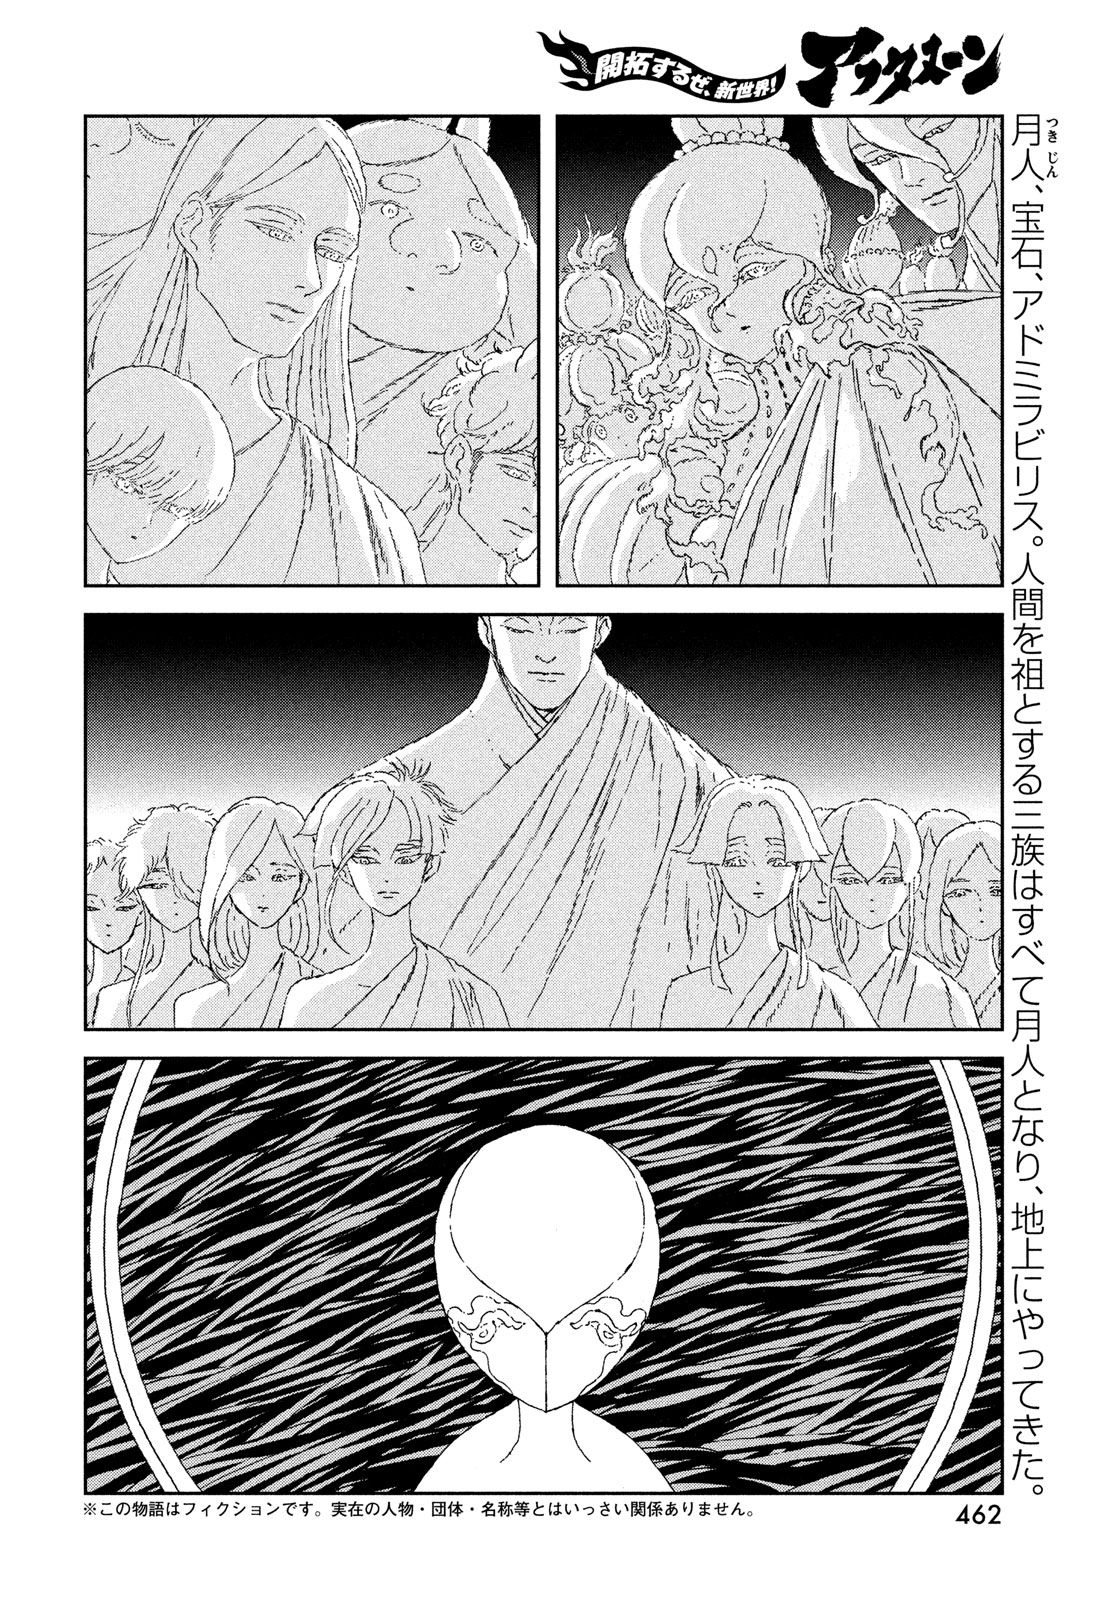 Houseki no Kuni - Chapter 98 - Page 2